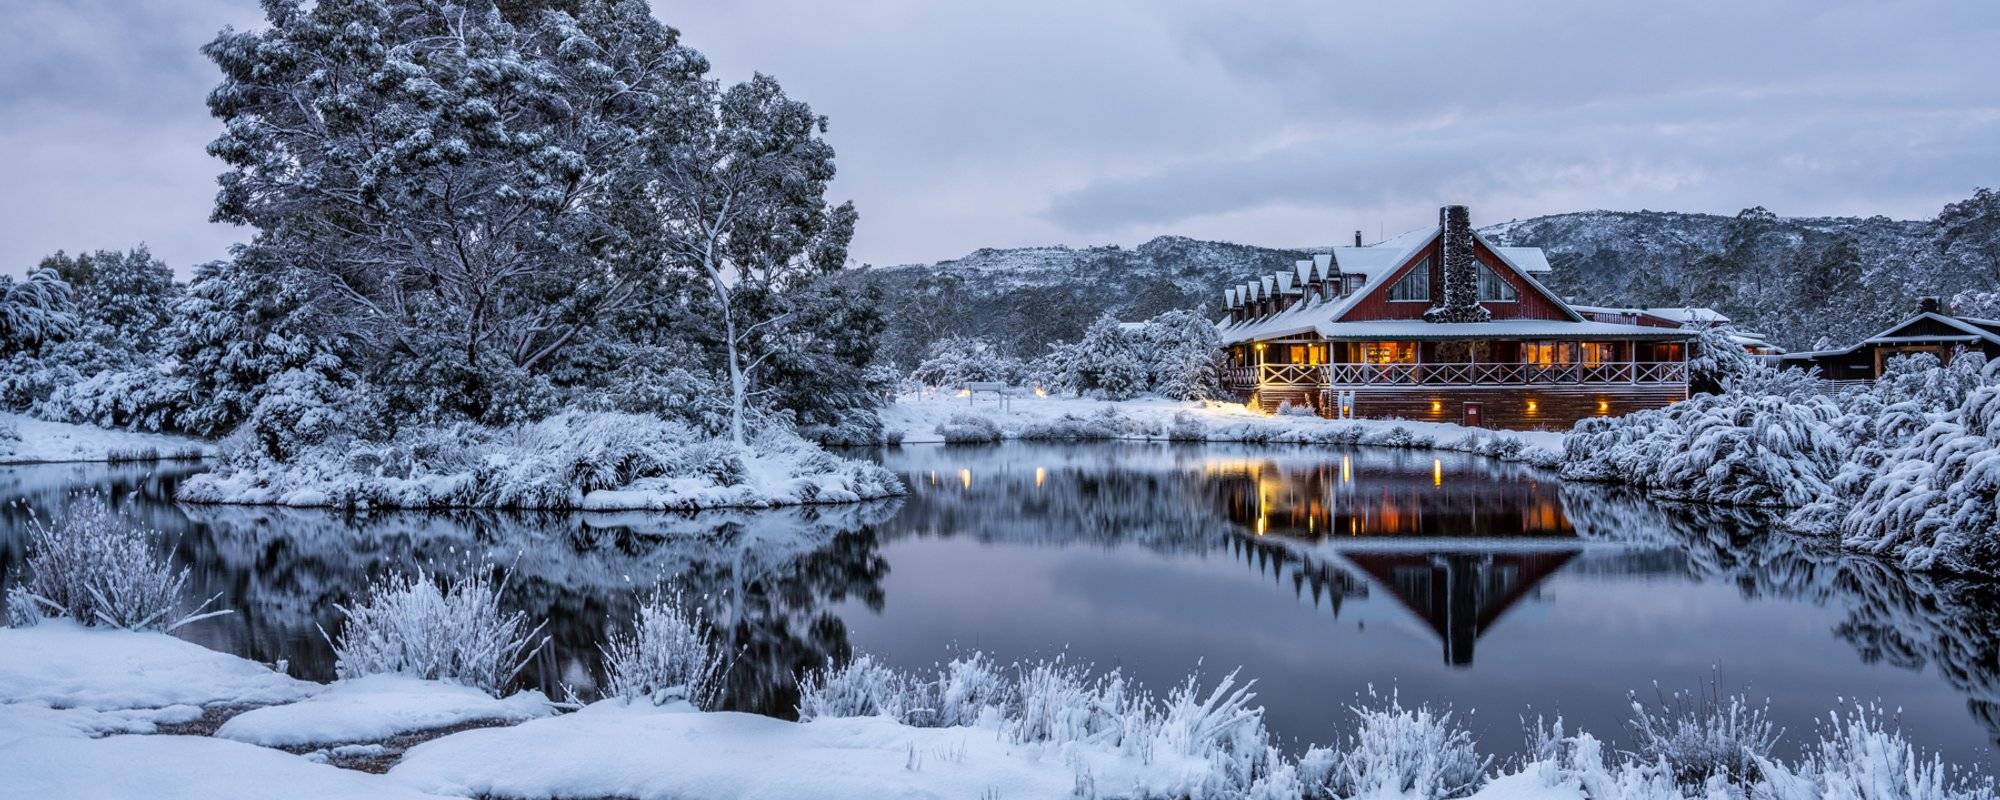 Winter in Tasmania, Australia (18 Photos)